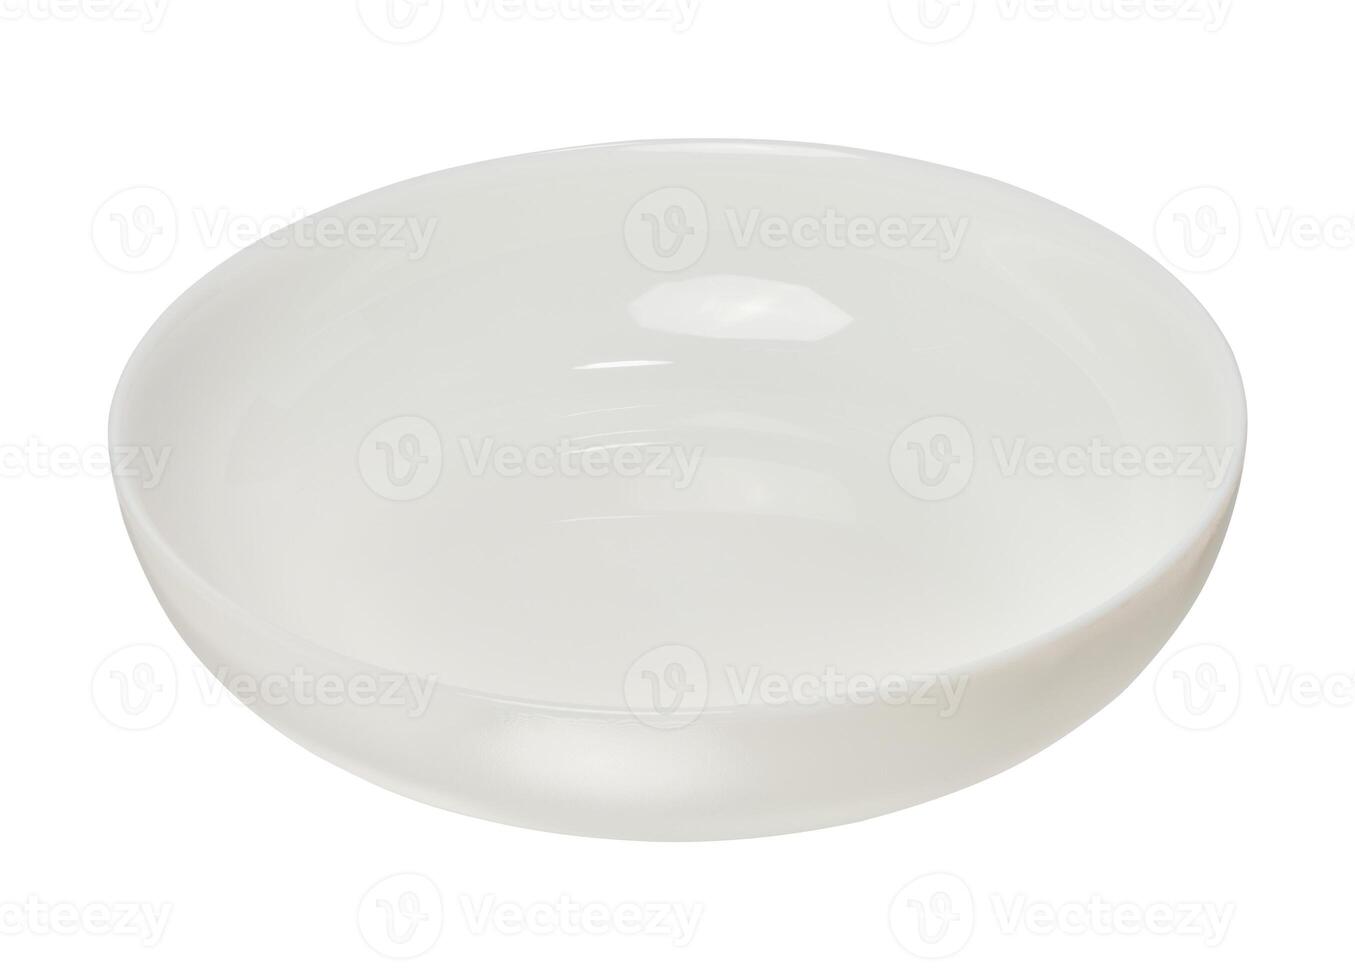 Empty white round ceramic plate on isolated background photo